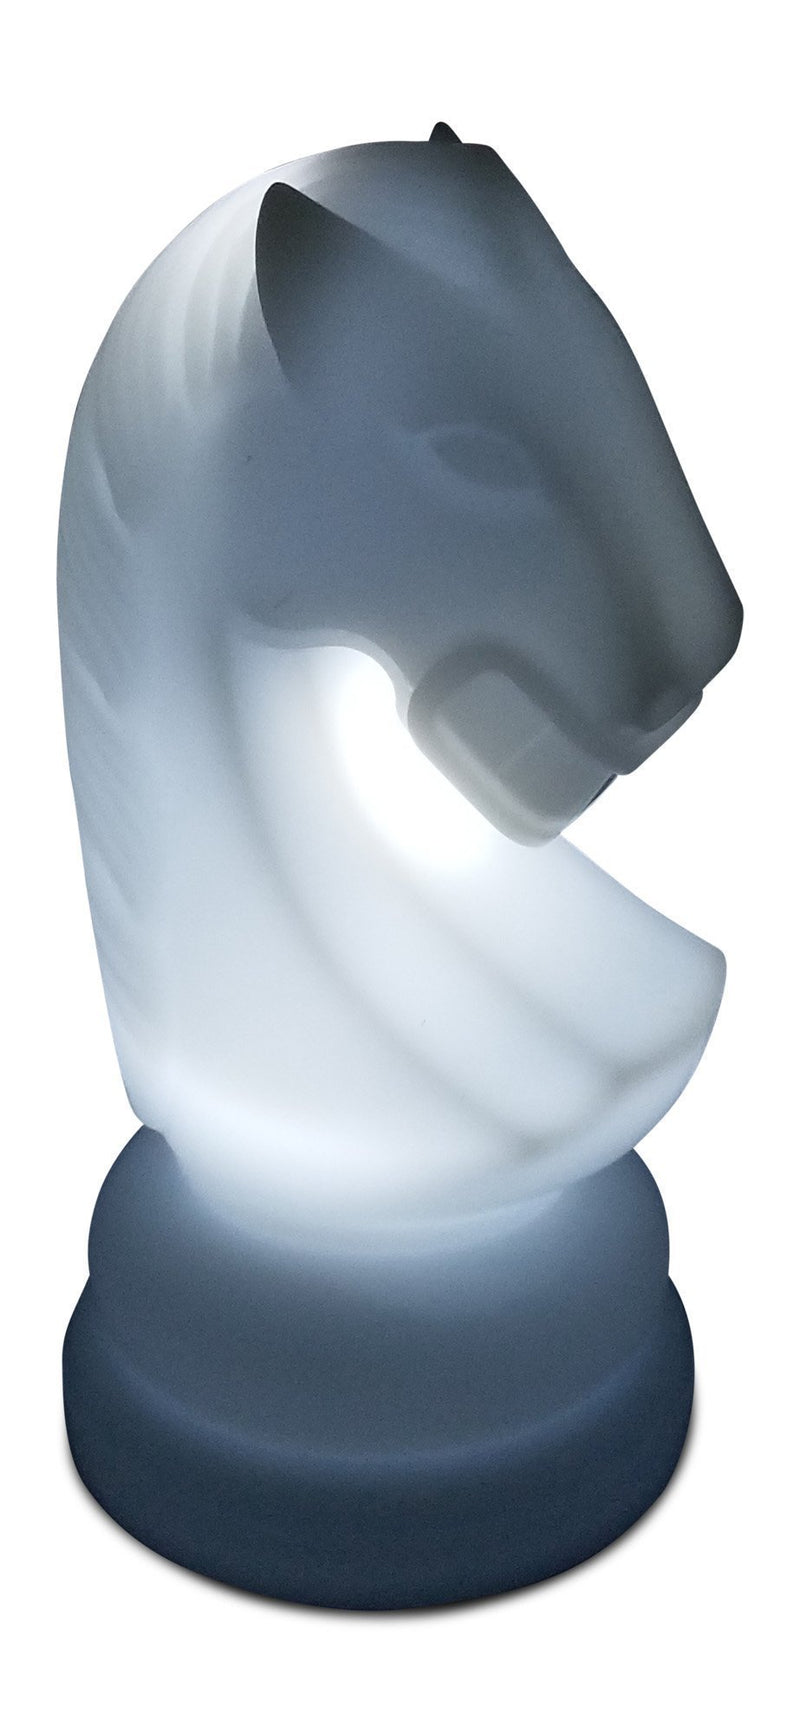 MegaChess 17 Inch Premium Plastic Knight Light-Up Giant Chess Piece - White |  | GiantChessUSA